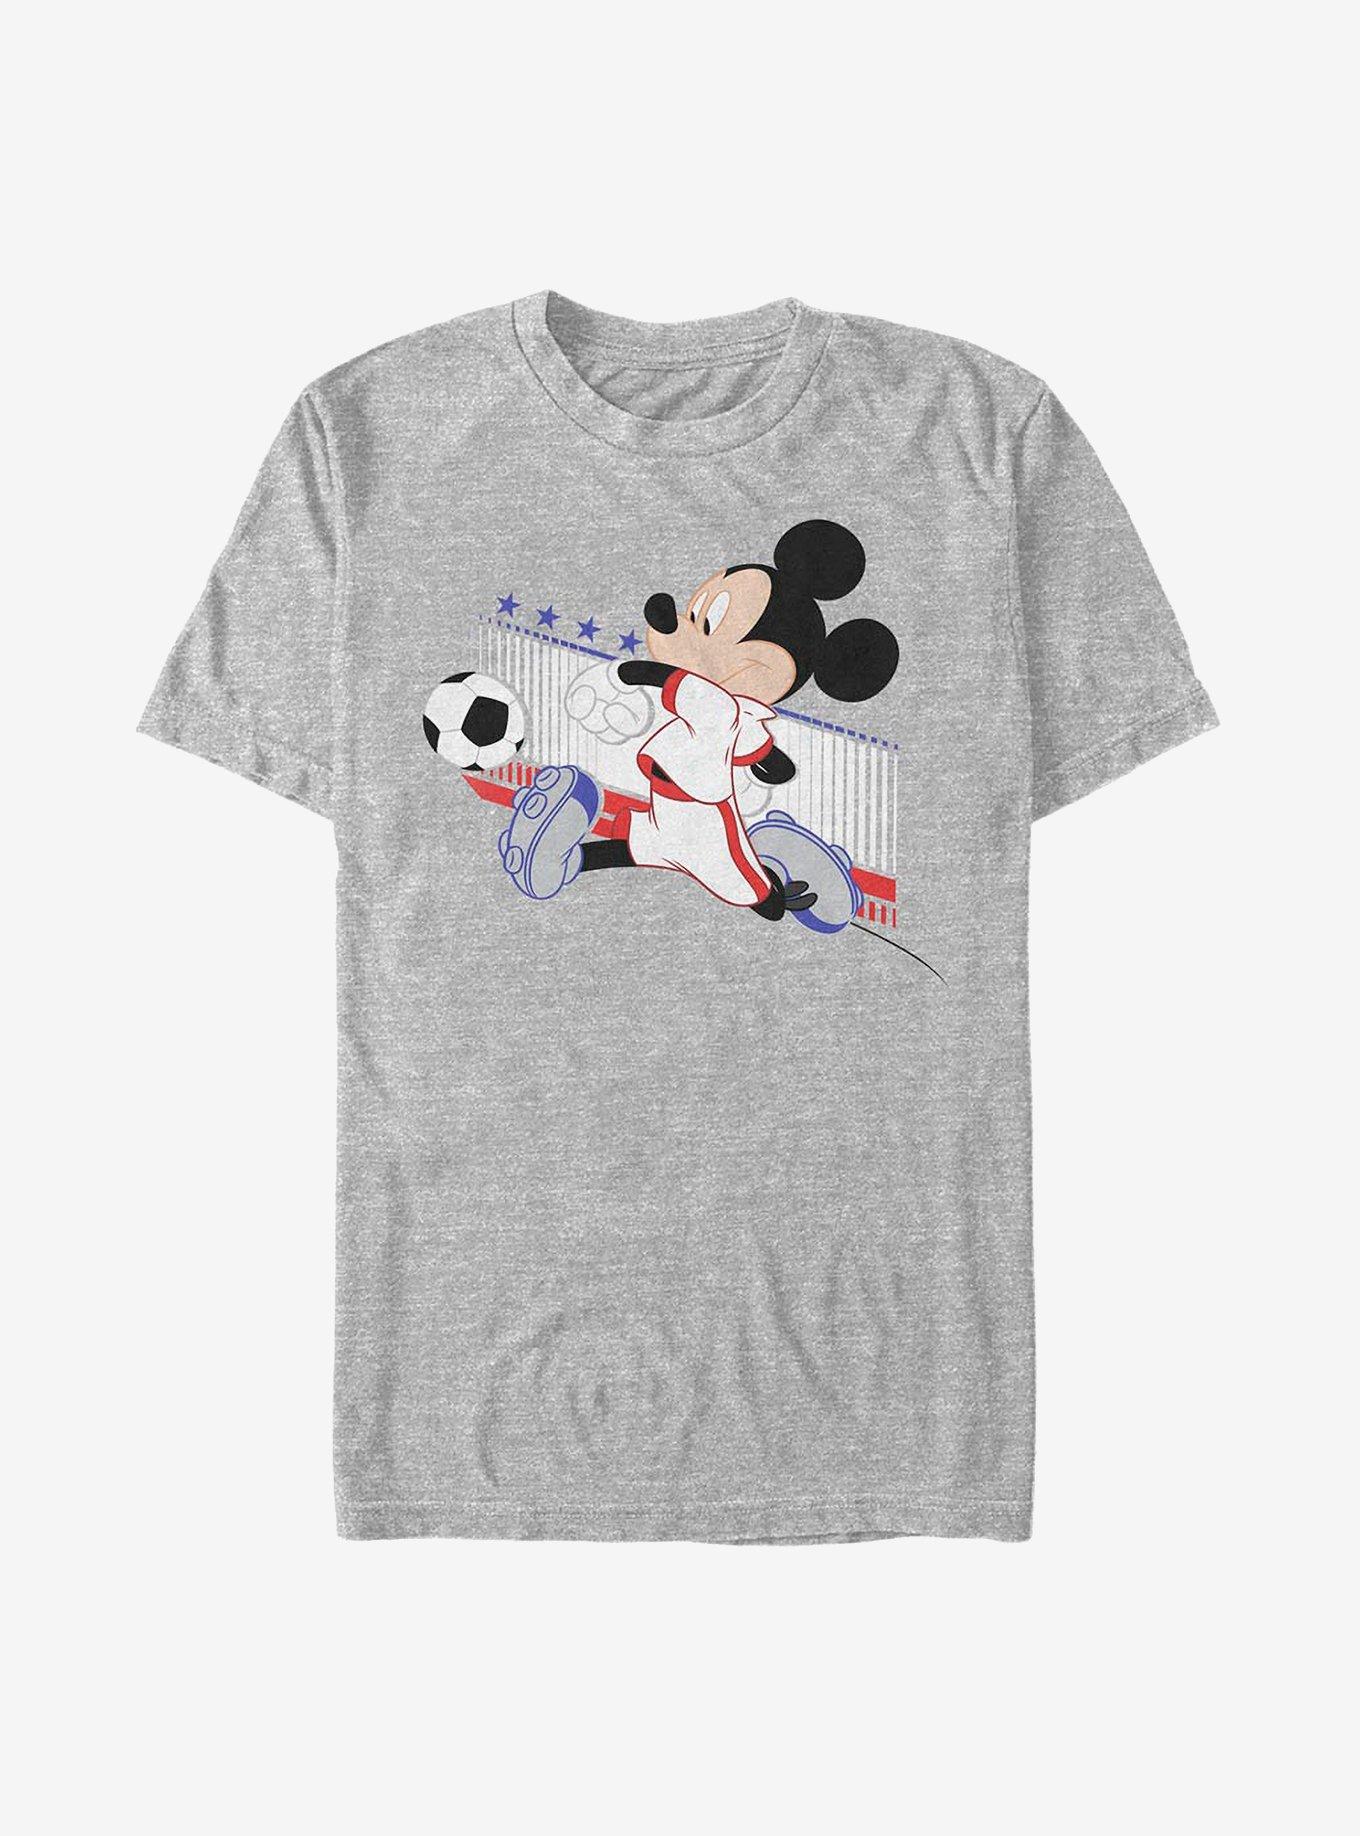 Disney Mickey Mouse France Kick T-Shirt - GREY | Hot Topic